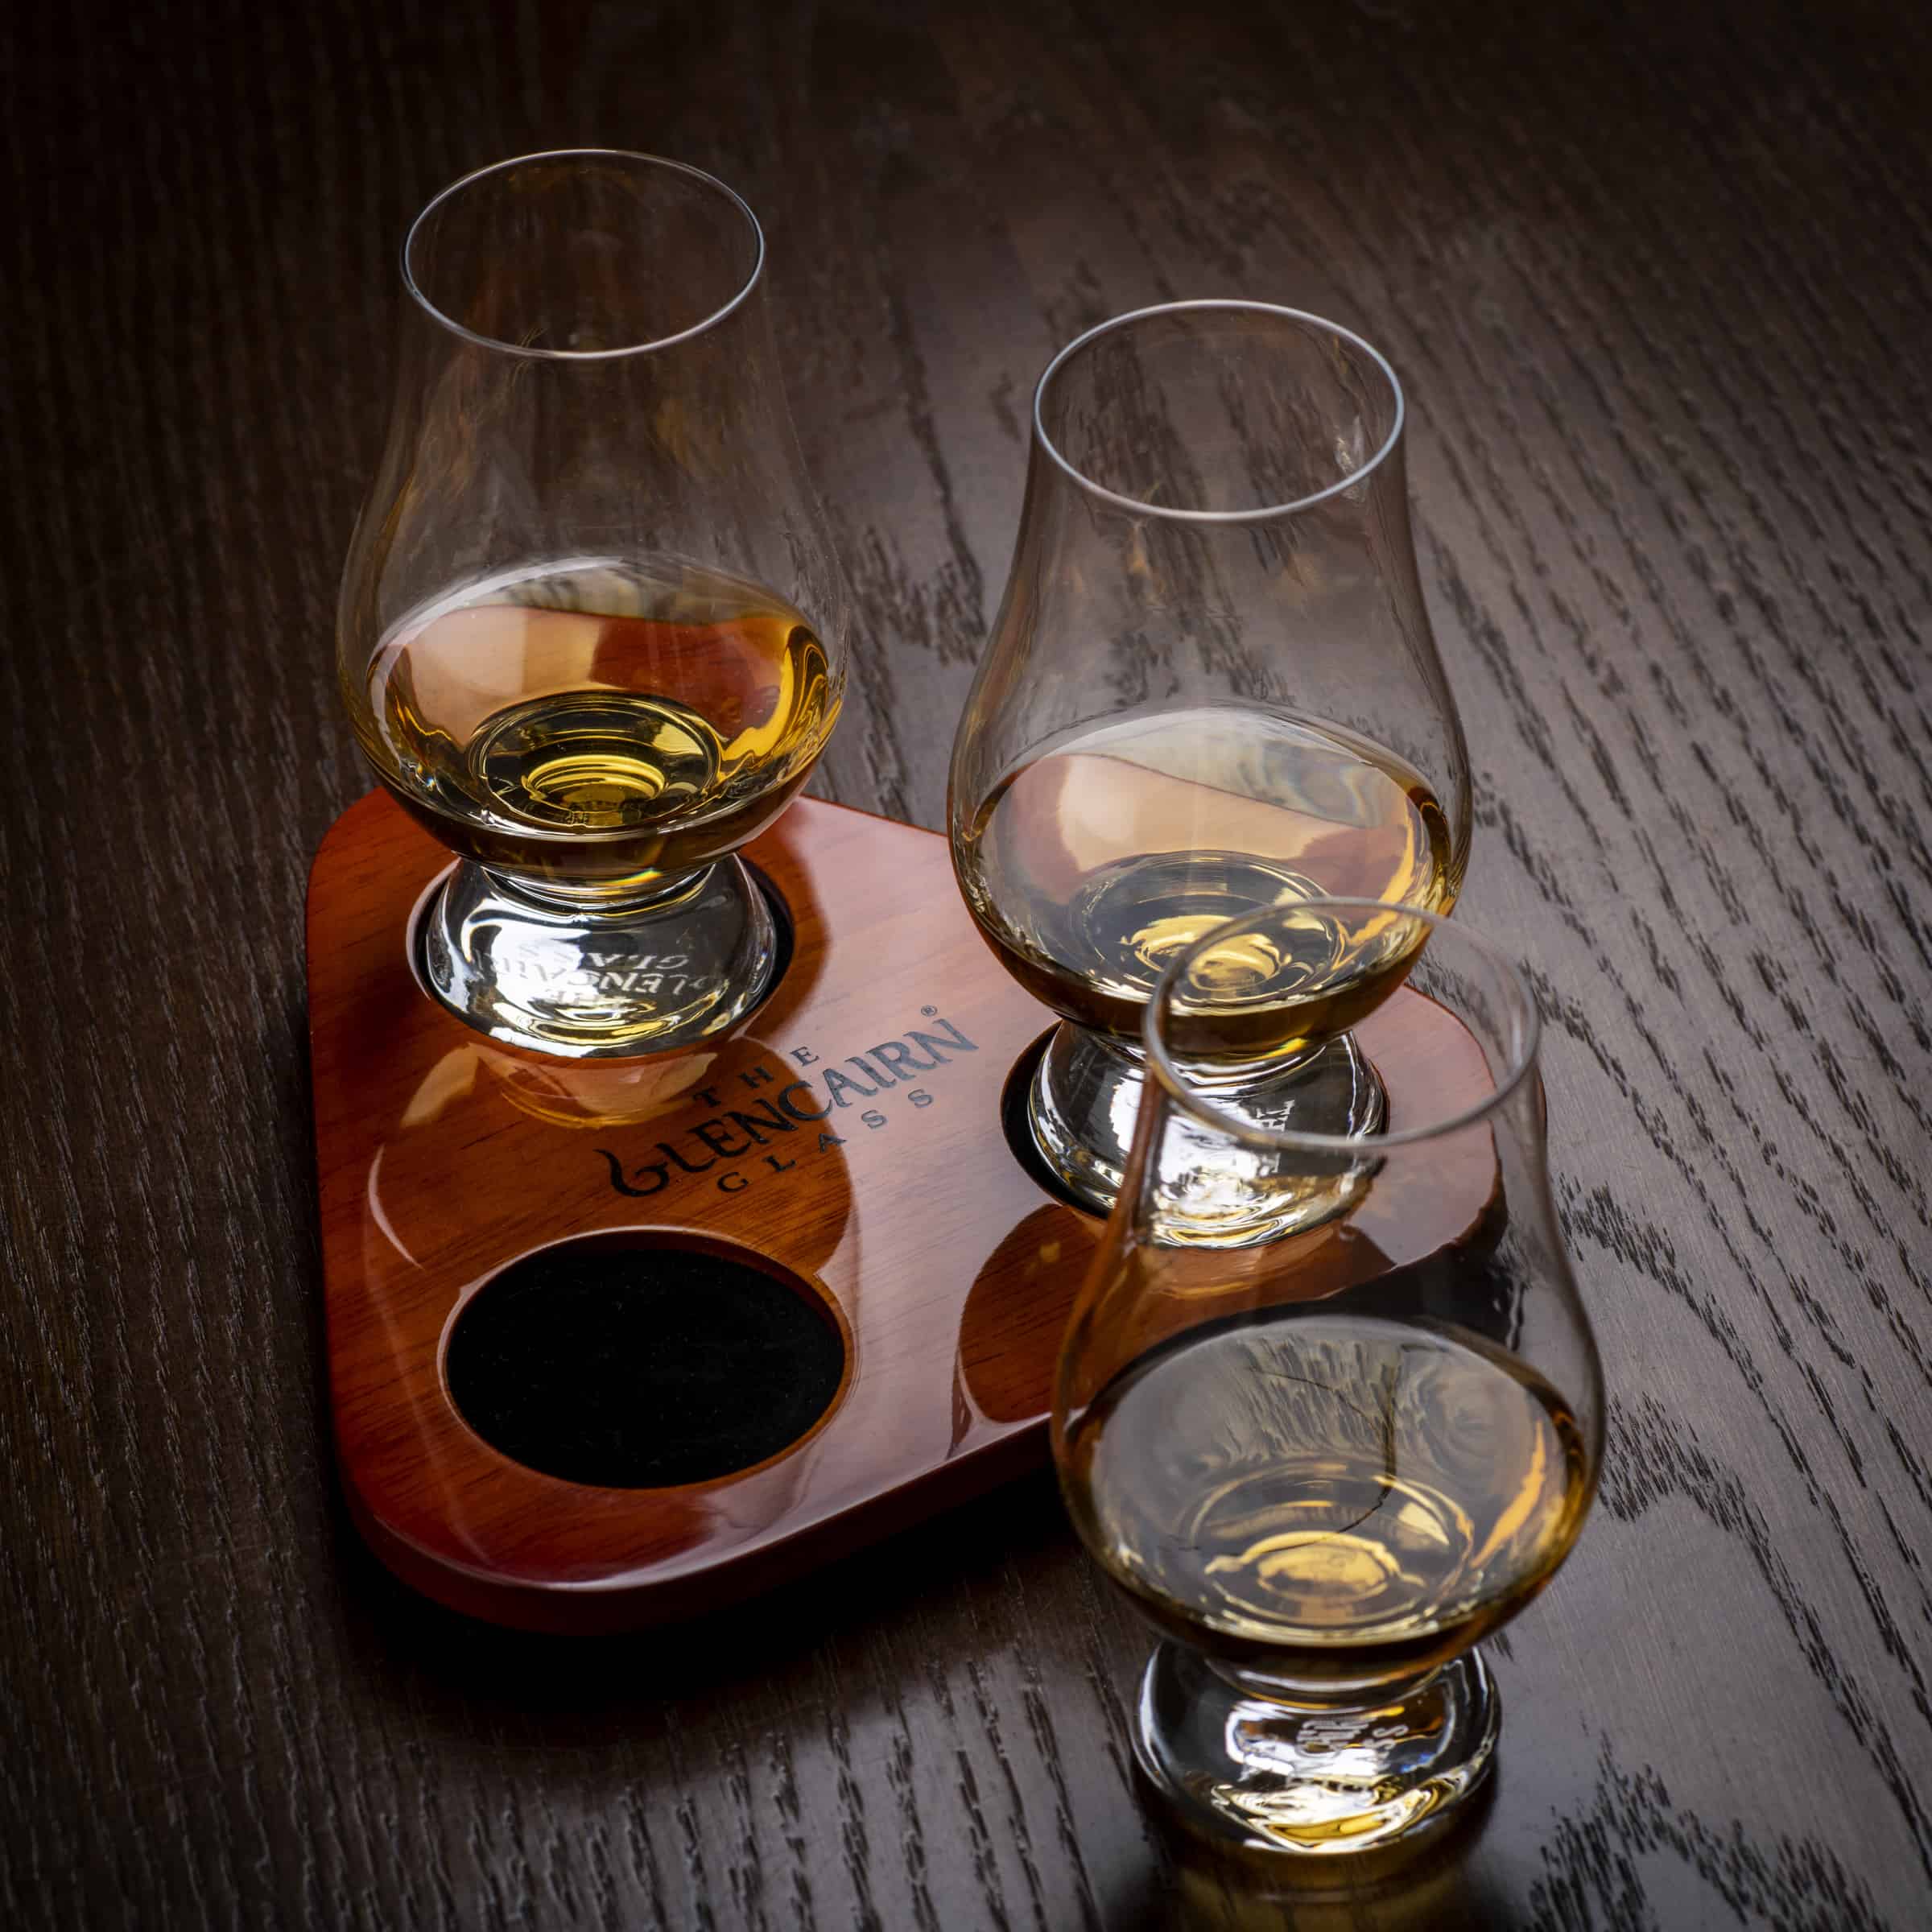 Set of 4 Glencairn Official Whisky Glass Original Scotch Crystal Whiskey  Glasses